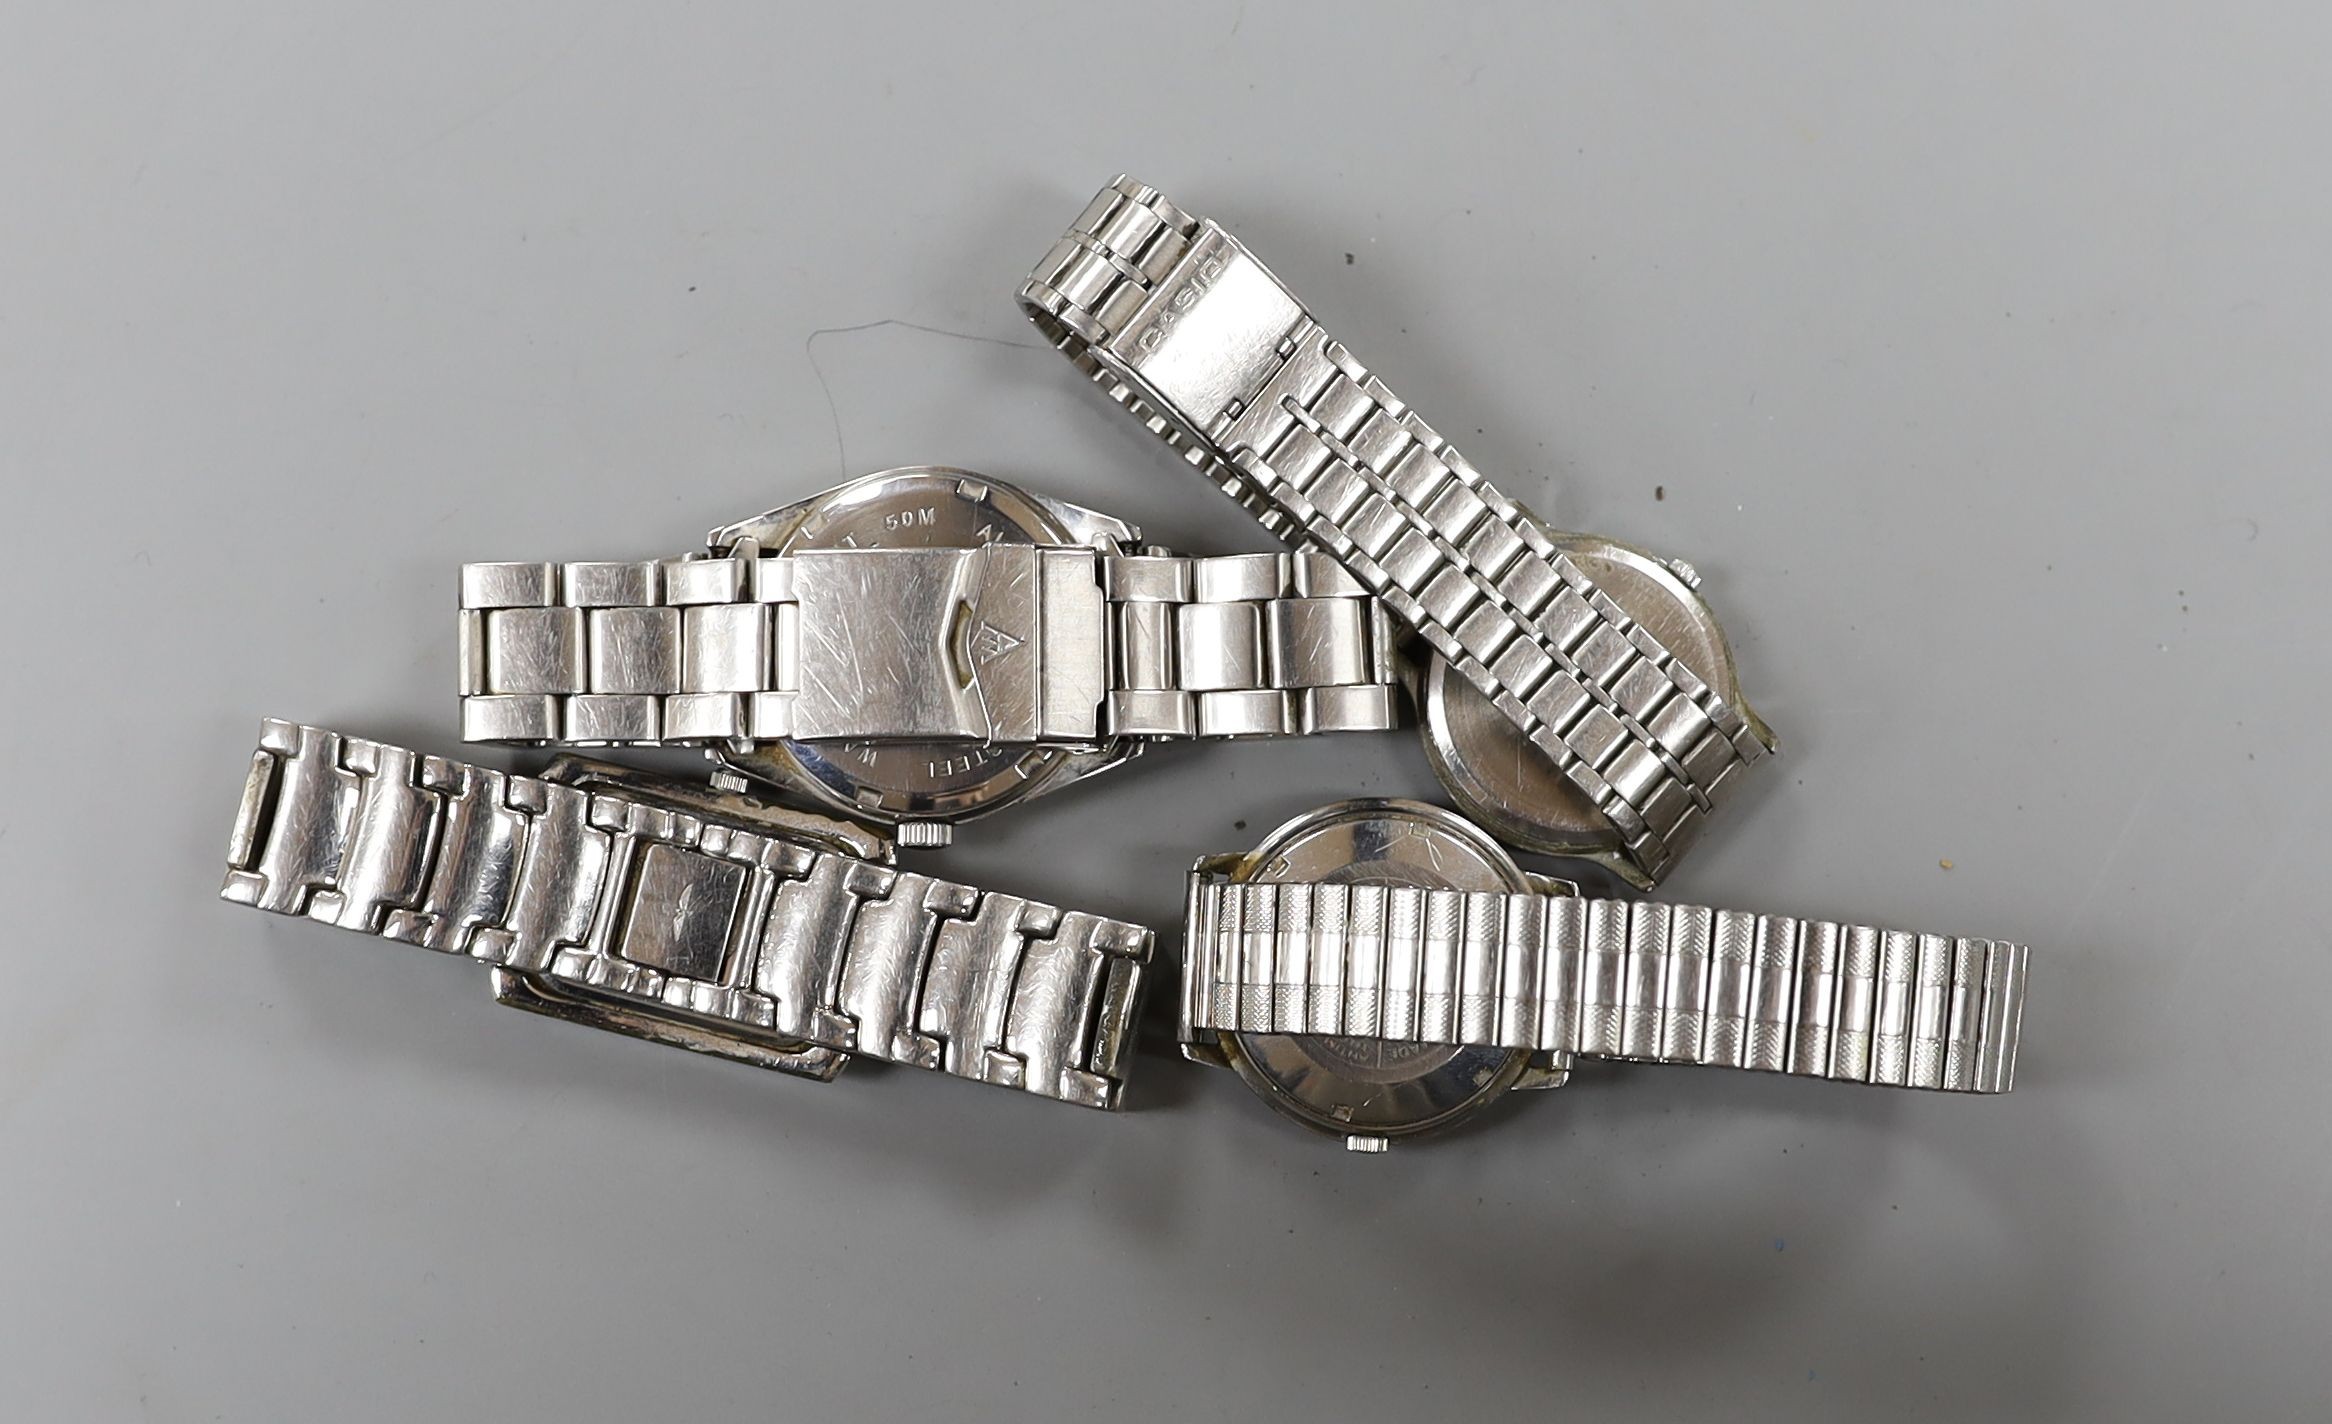 Four assorted gentleman's wrist watches including a 1960's steel Eloga watch.